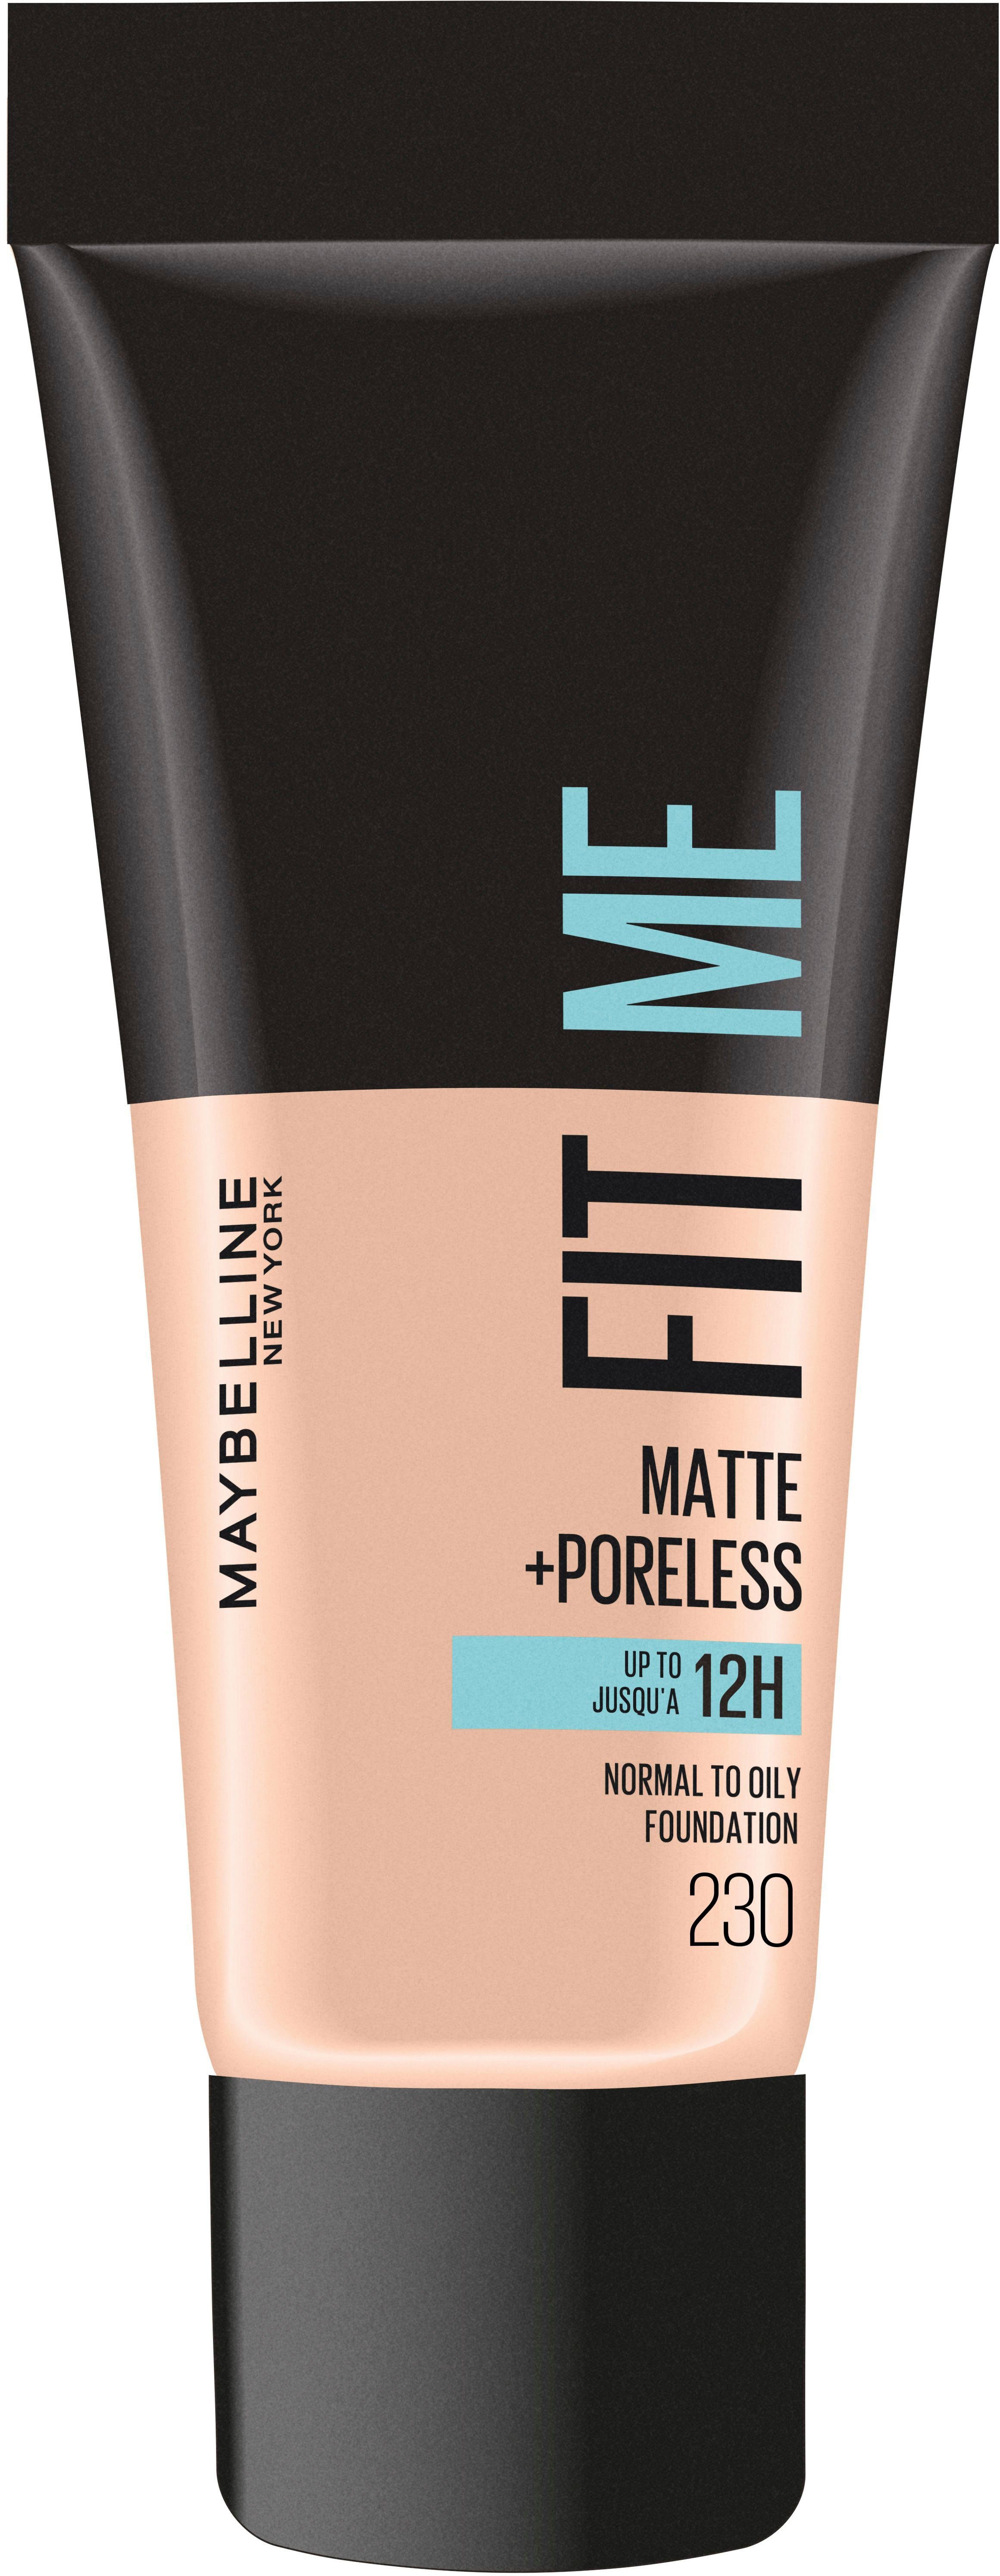 York Maybelline New NEW Make-Up Poreless YORK MAYBELLINE Me! Fit + Matte Foundation